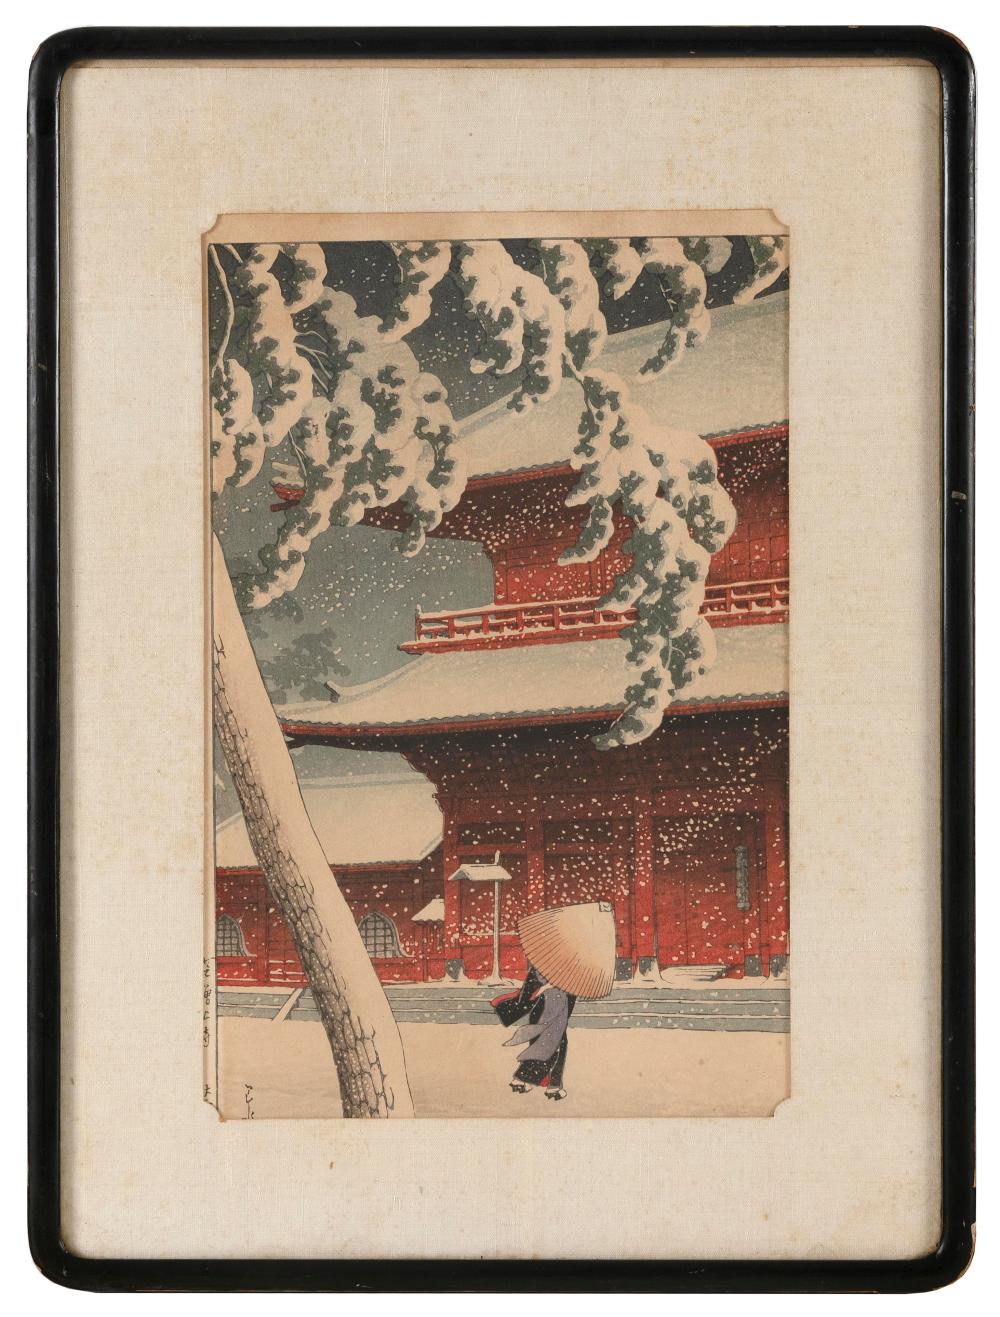 HASUI KAWASE JAPAN 1883 1957  3c7e06